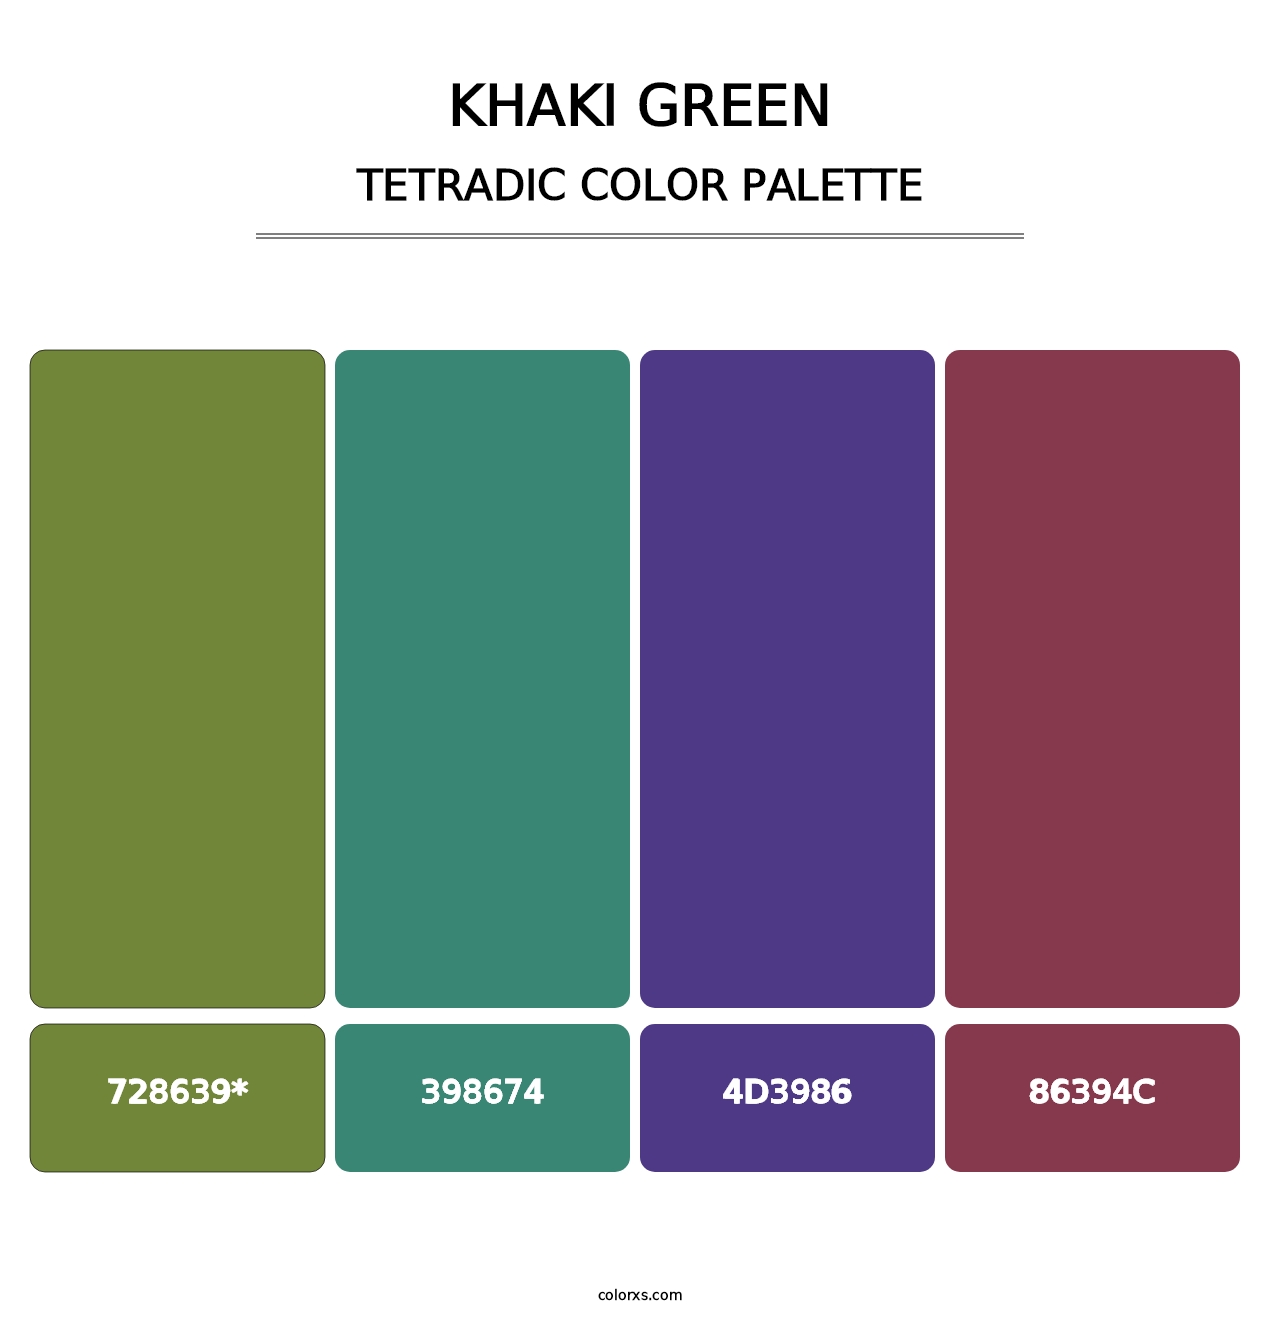 Khaki Green - Tetradic Color Palette